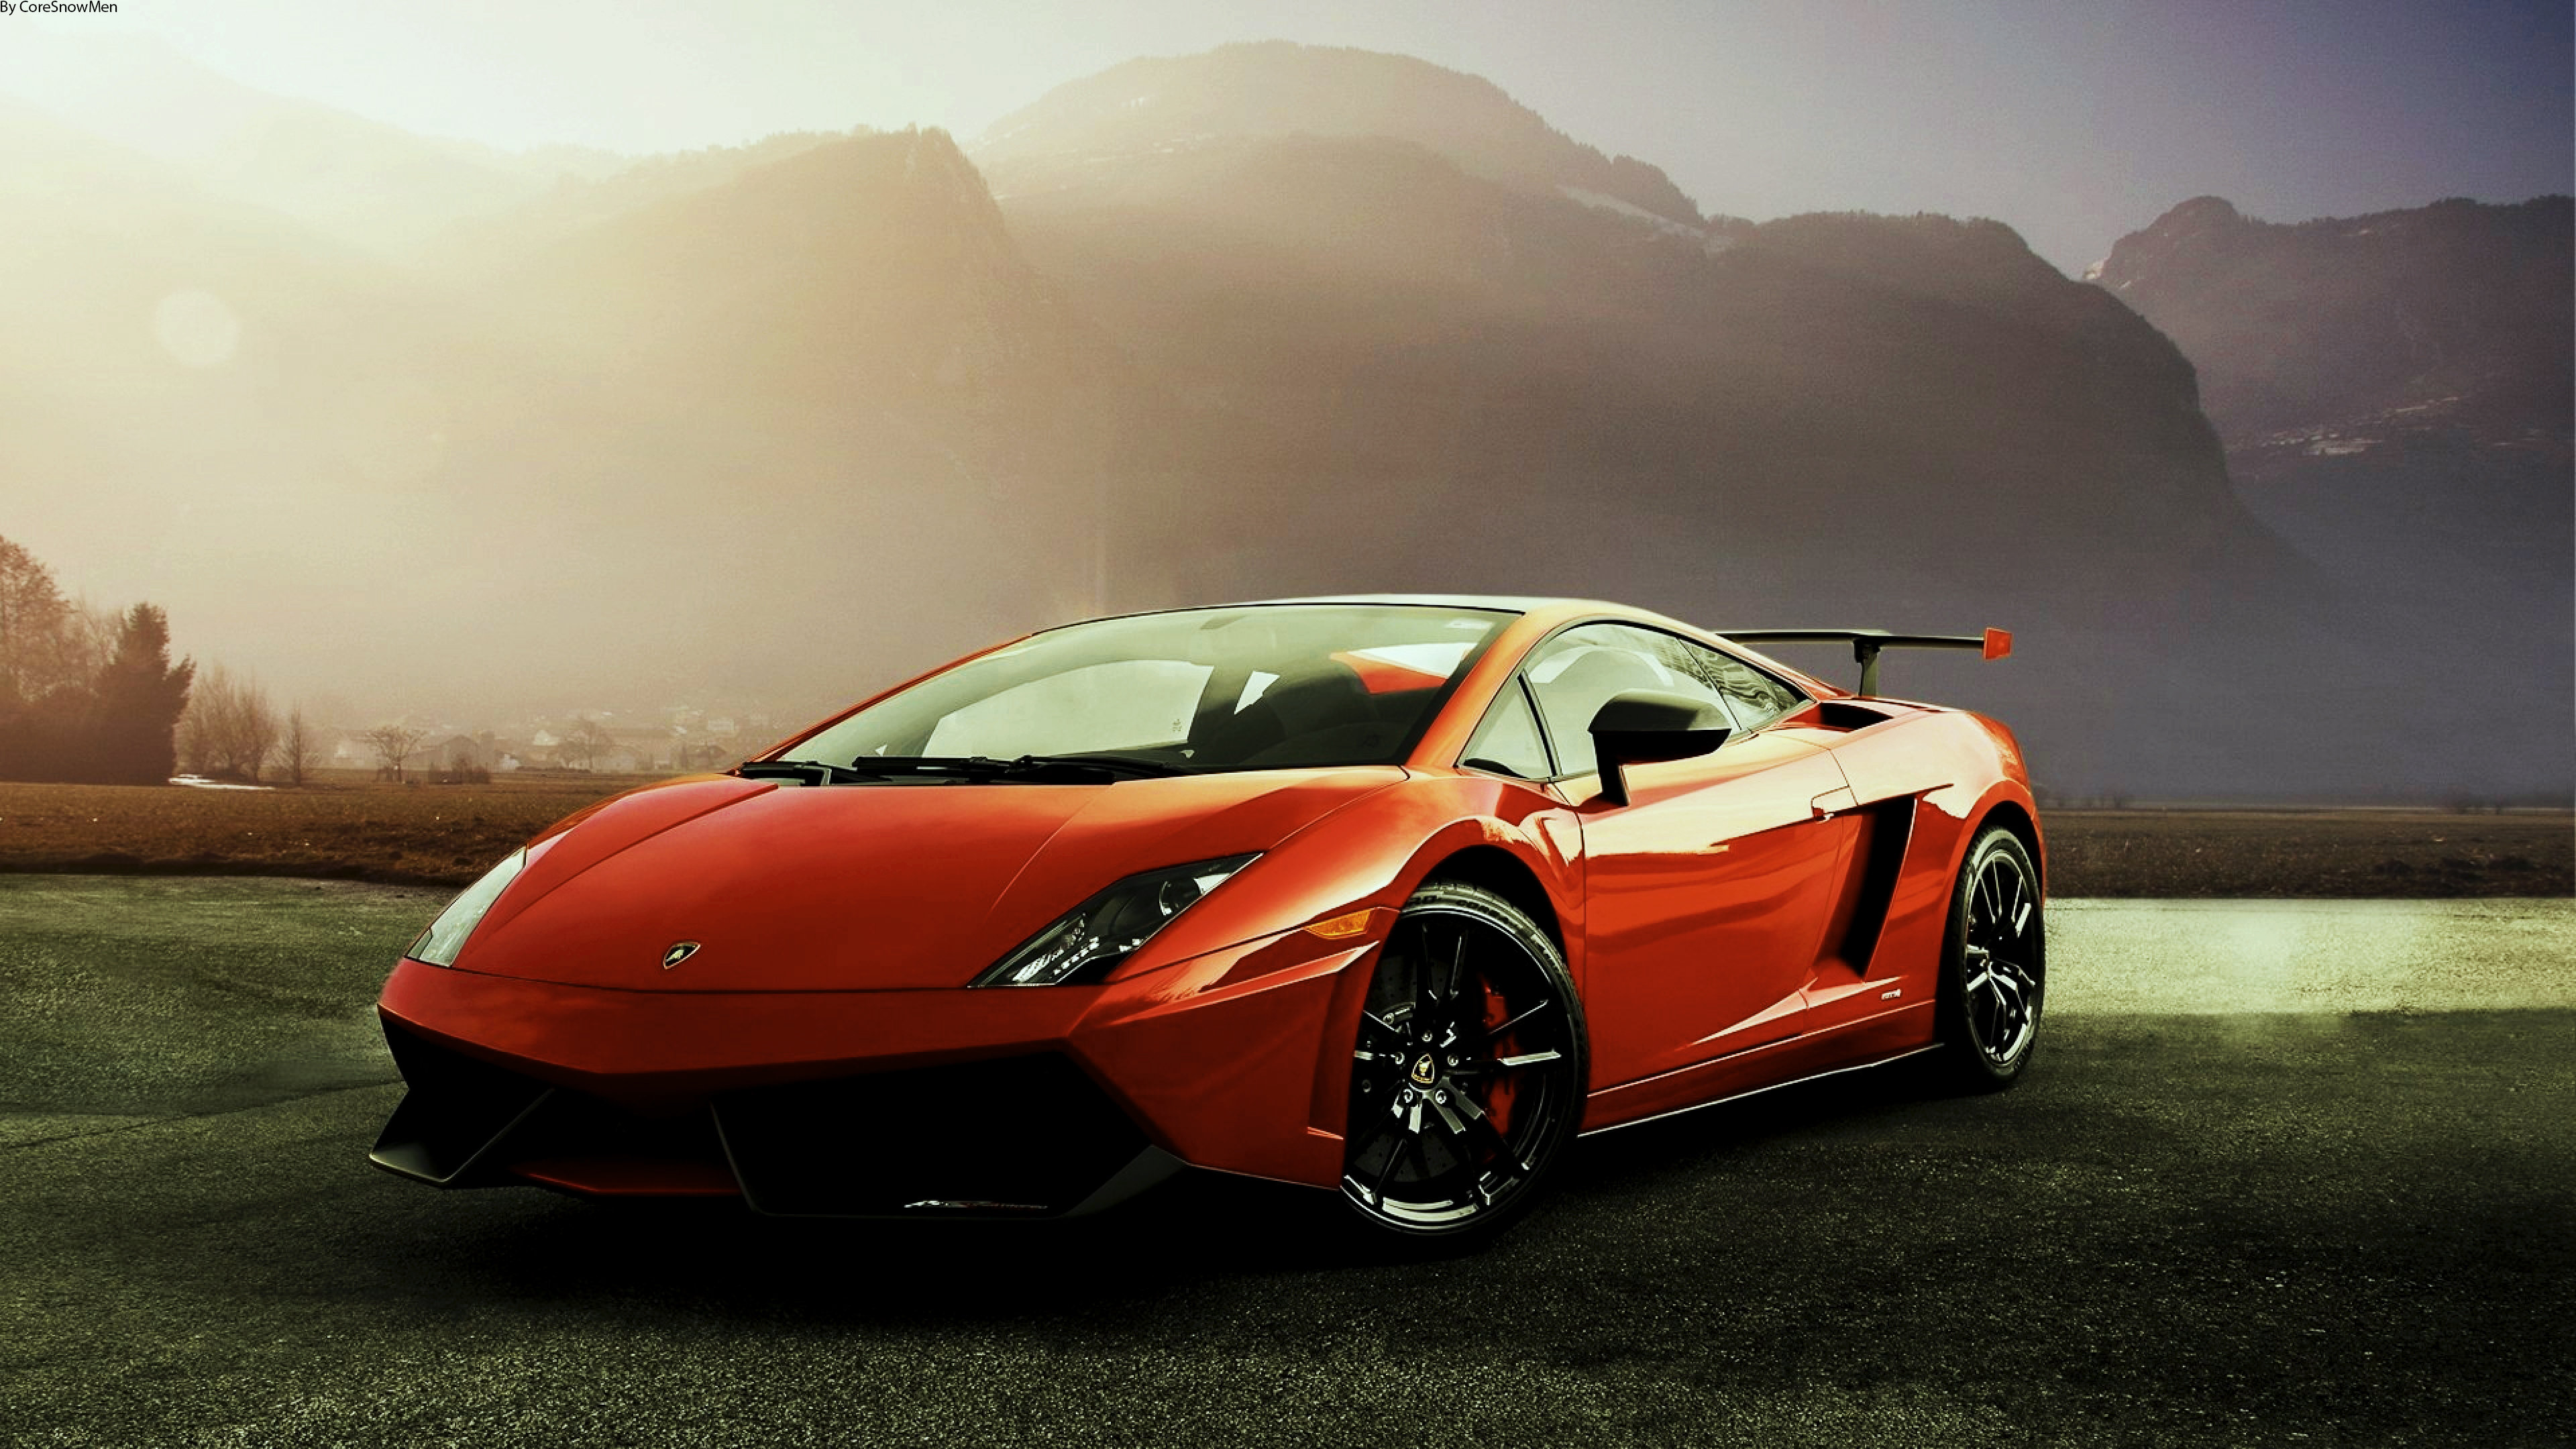 Best Lamborghini Gallardo background ID:293024 for High Resolution ultra hd 4k desktop